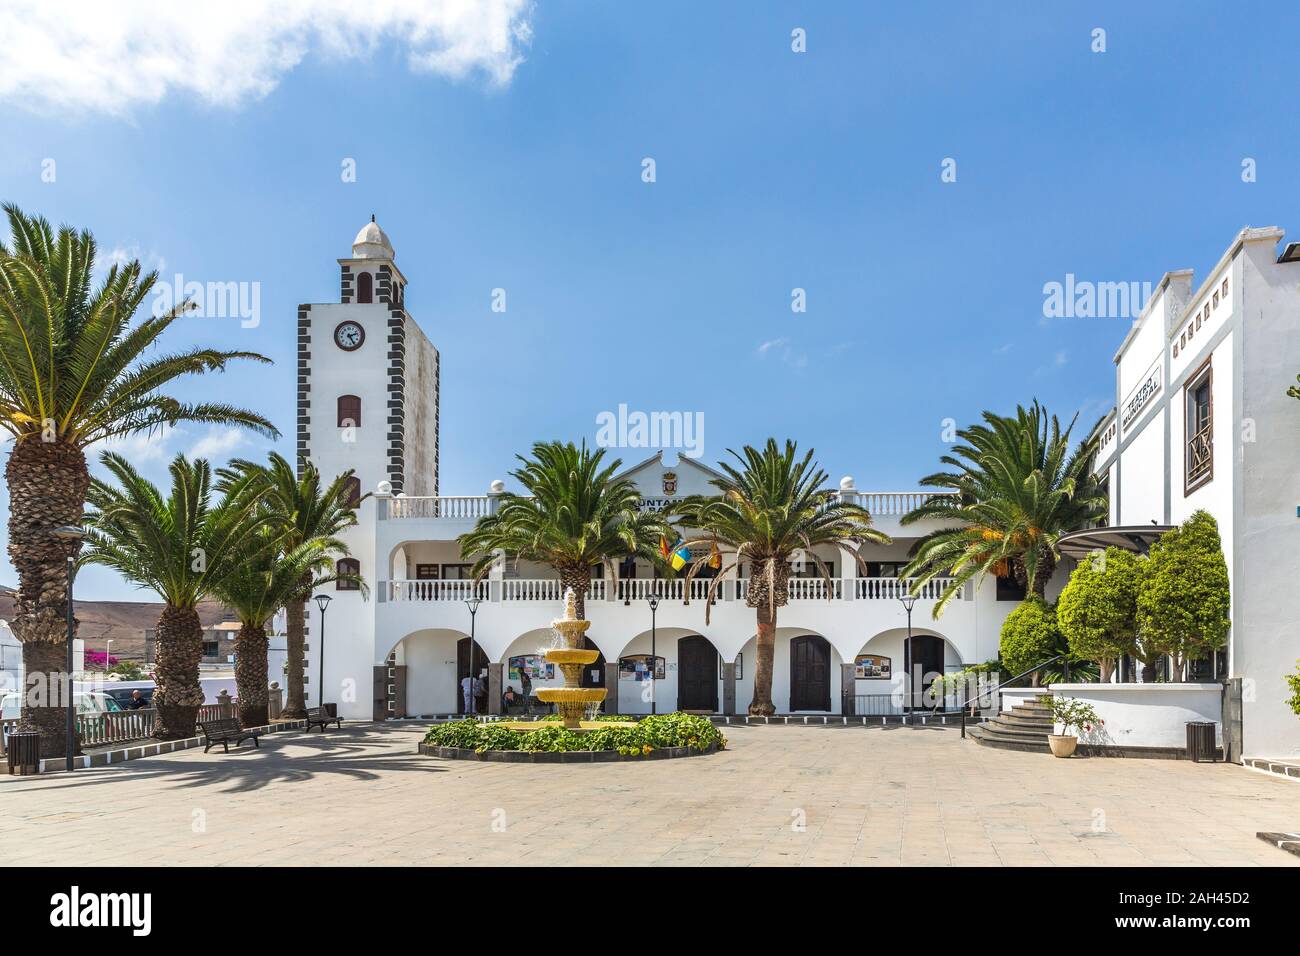 Spain, Balearic Islands, Lanzarote, San Bartalome, Townhall and city theater Stock Photo